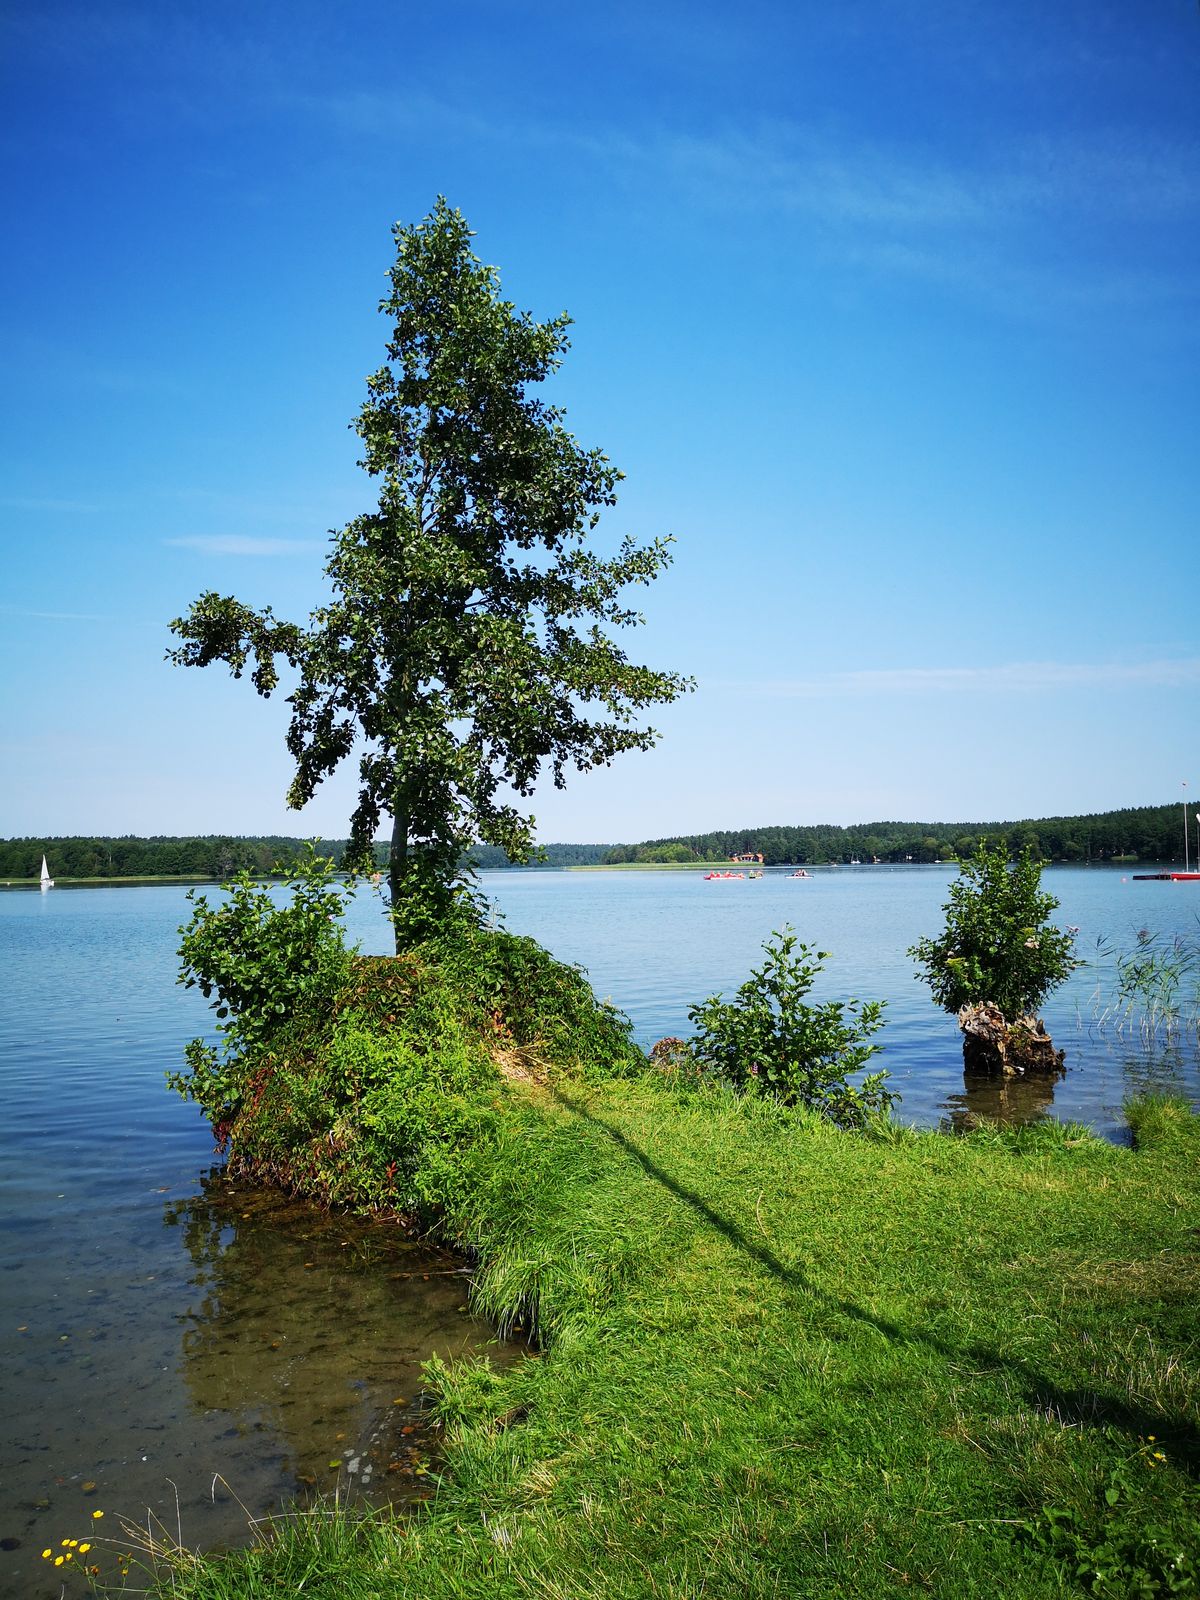 Jezioro Pluszne

